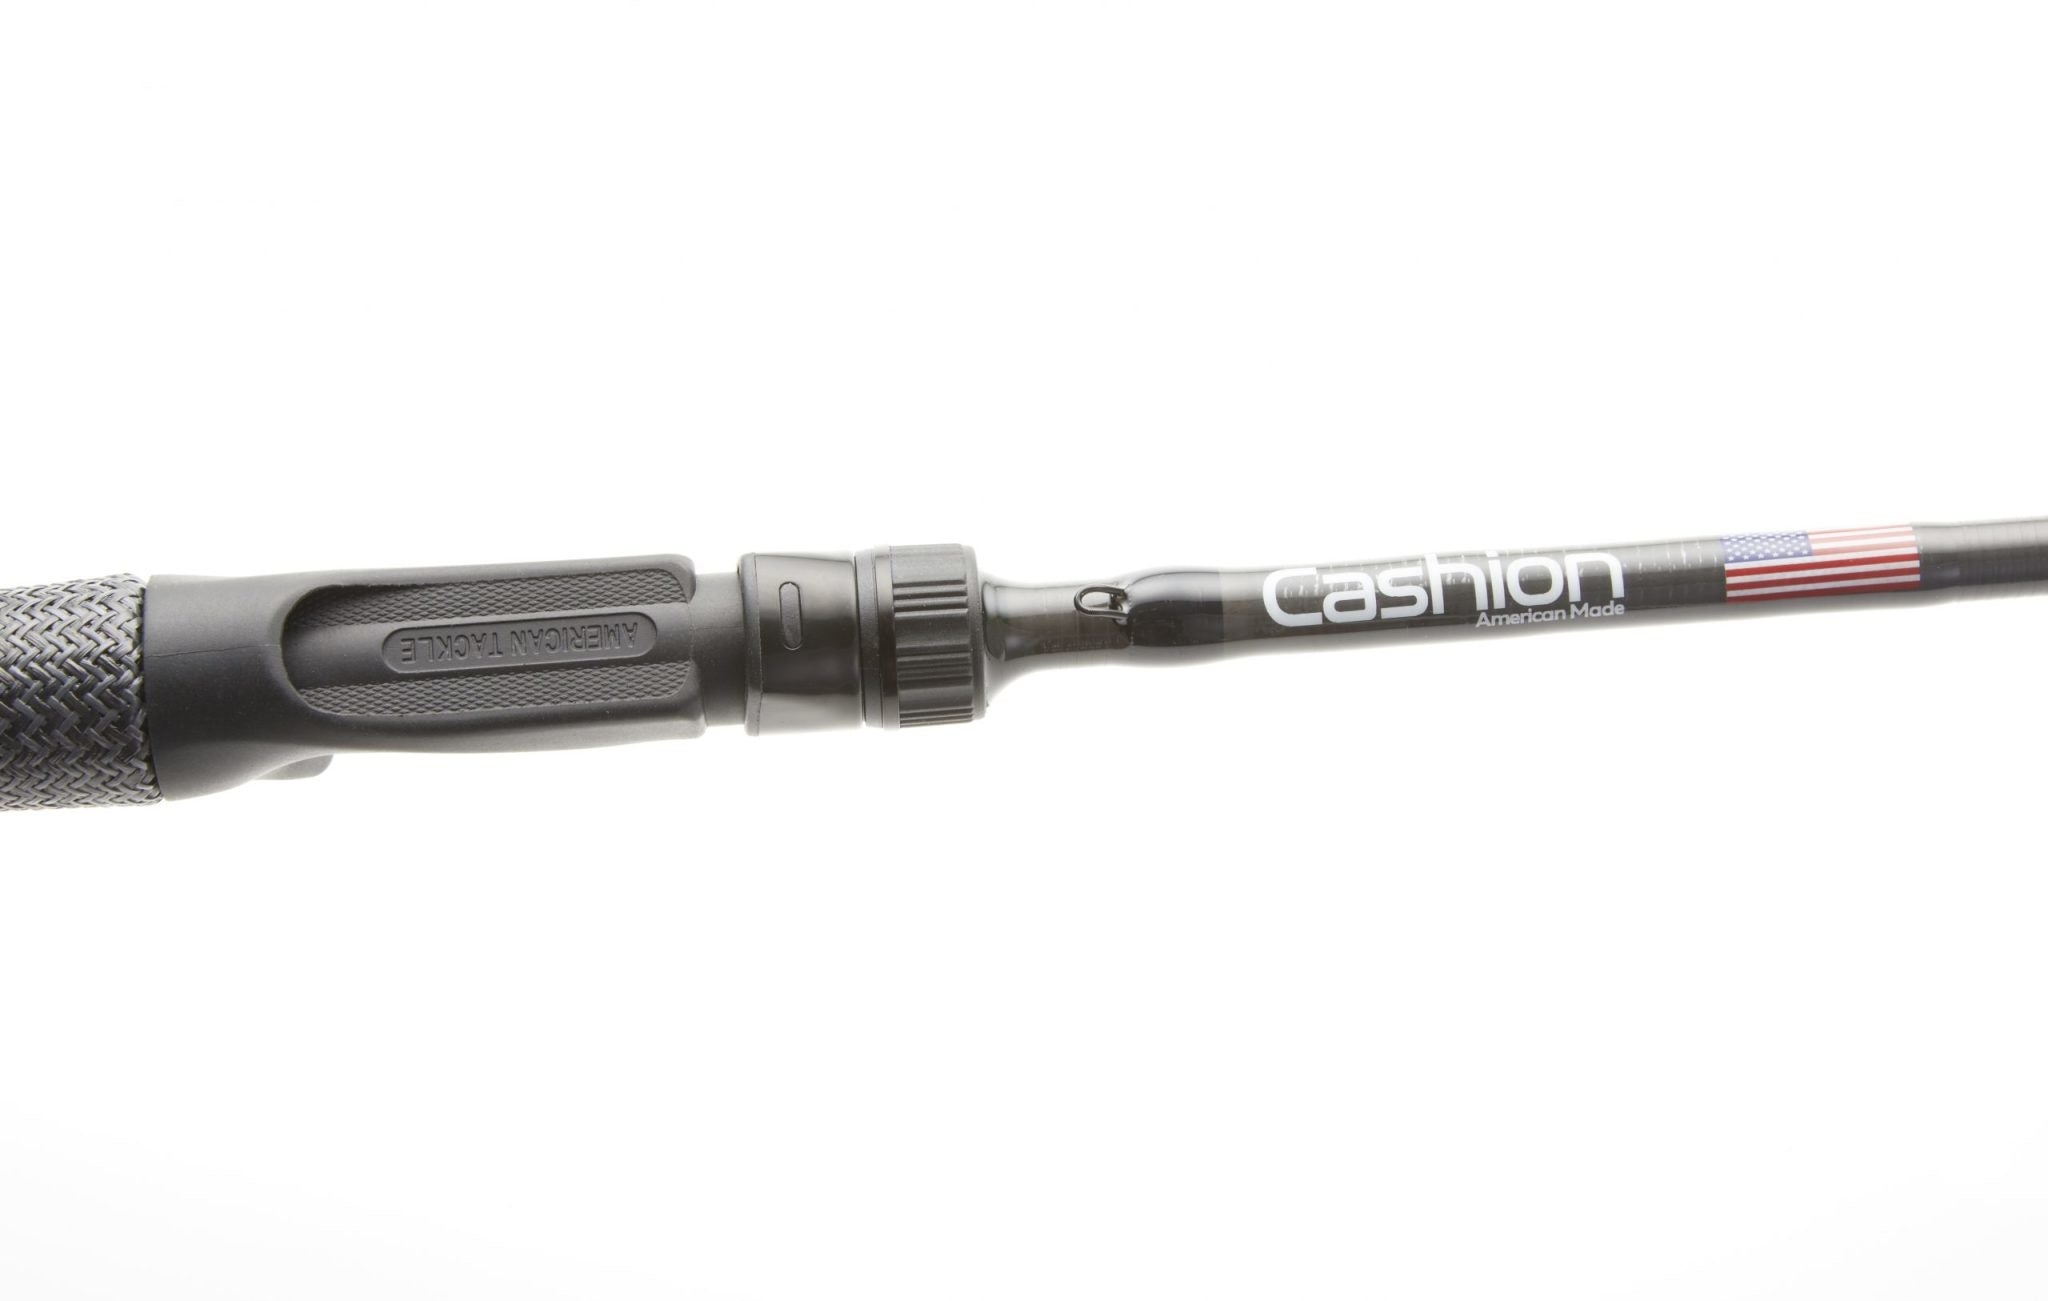 Cashion ICON Bait Finesse System Casting Rod - Hamilton Bait and Tackle